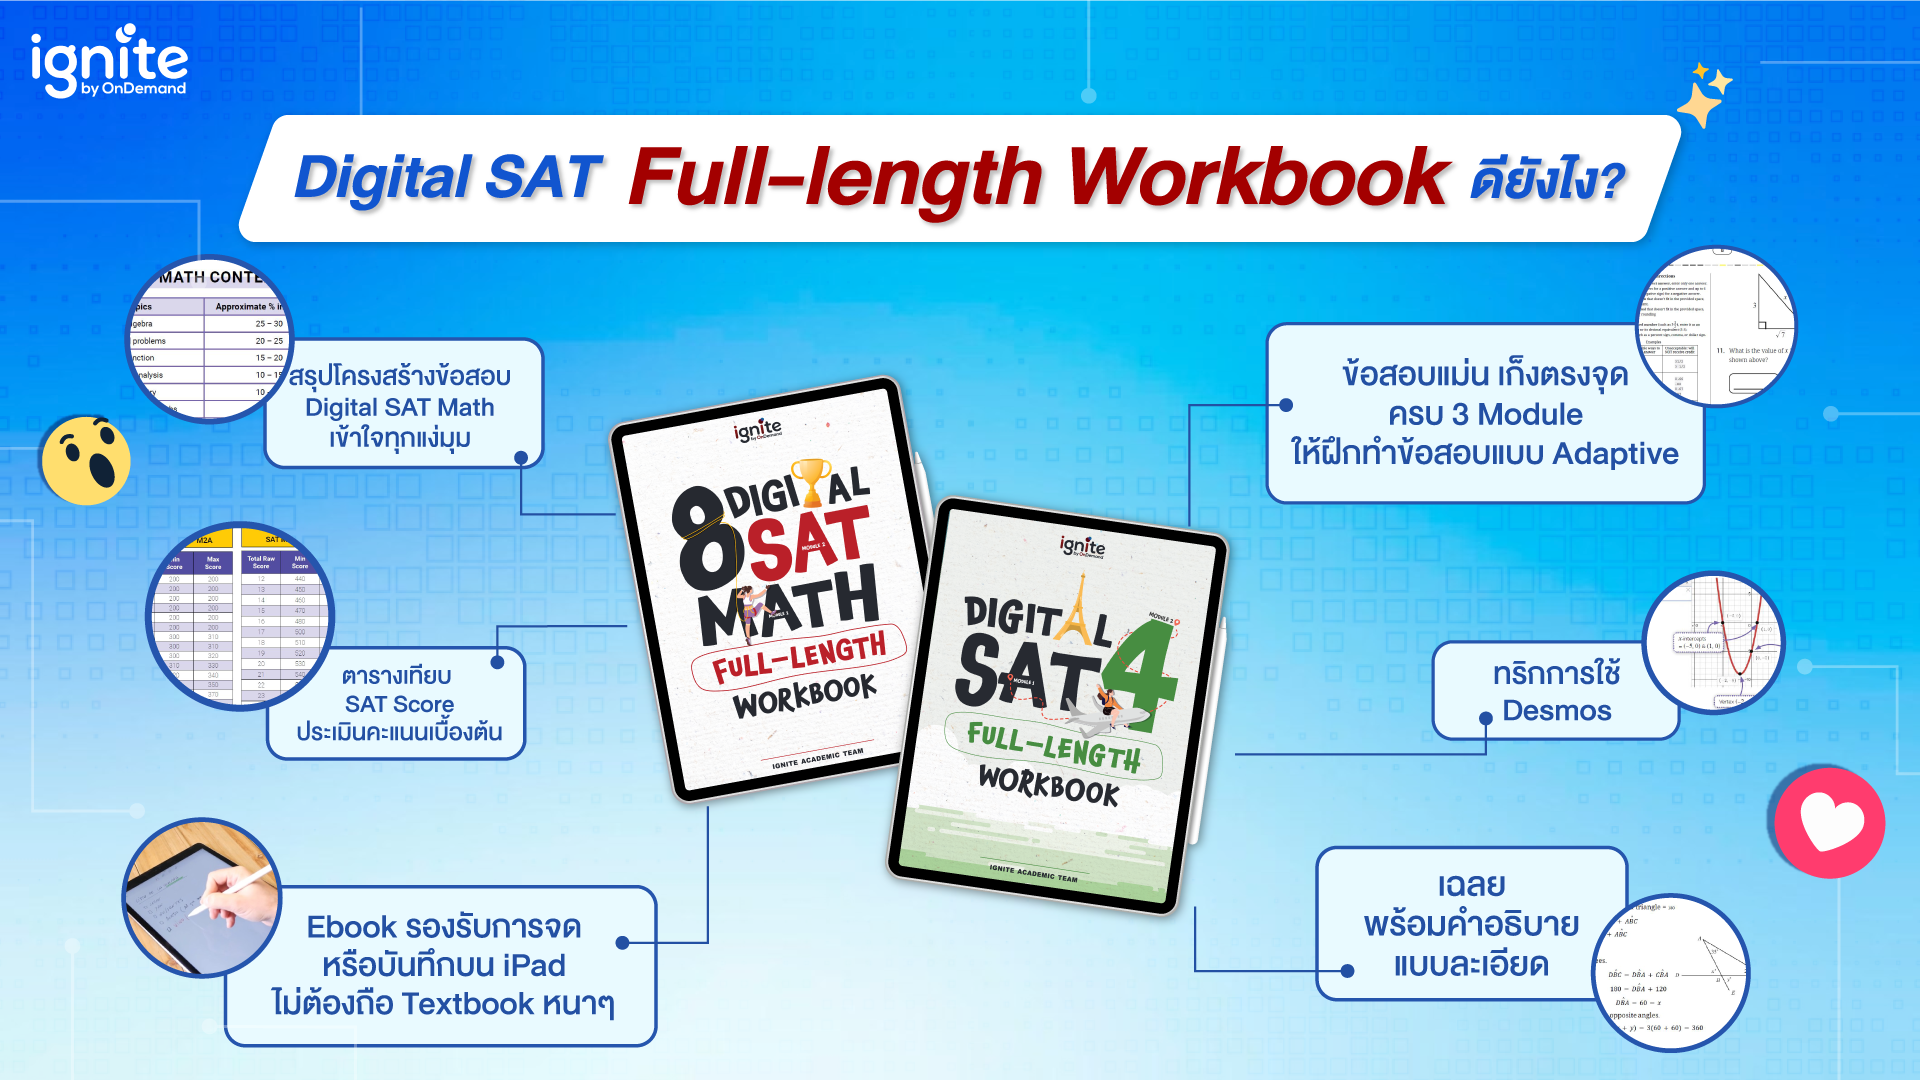 benefits of digital sat full length workbook ignite by ondemand